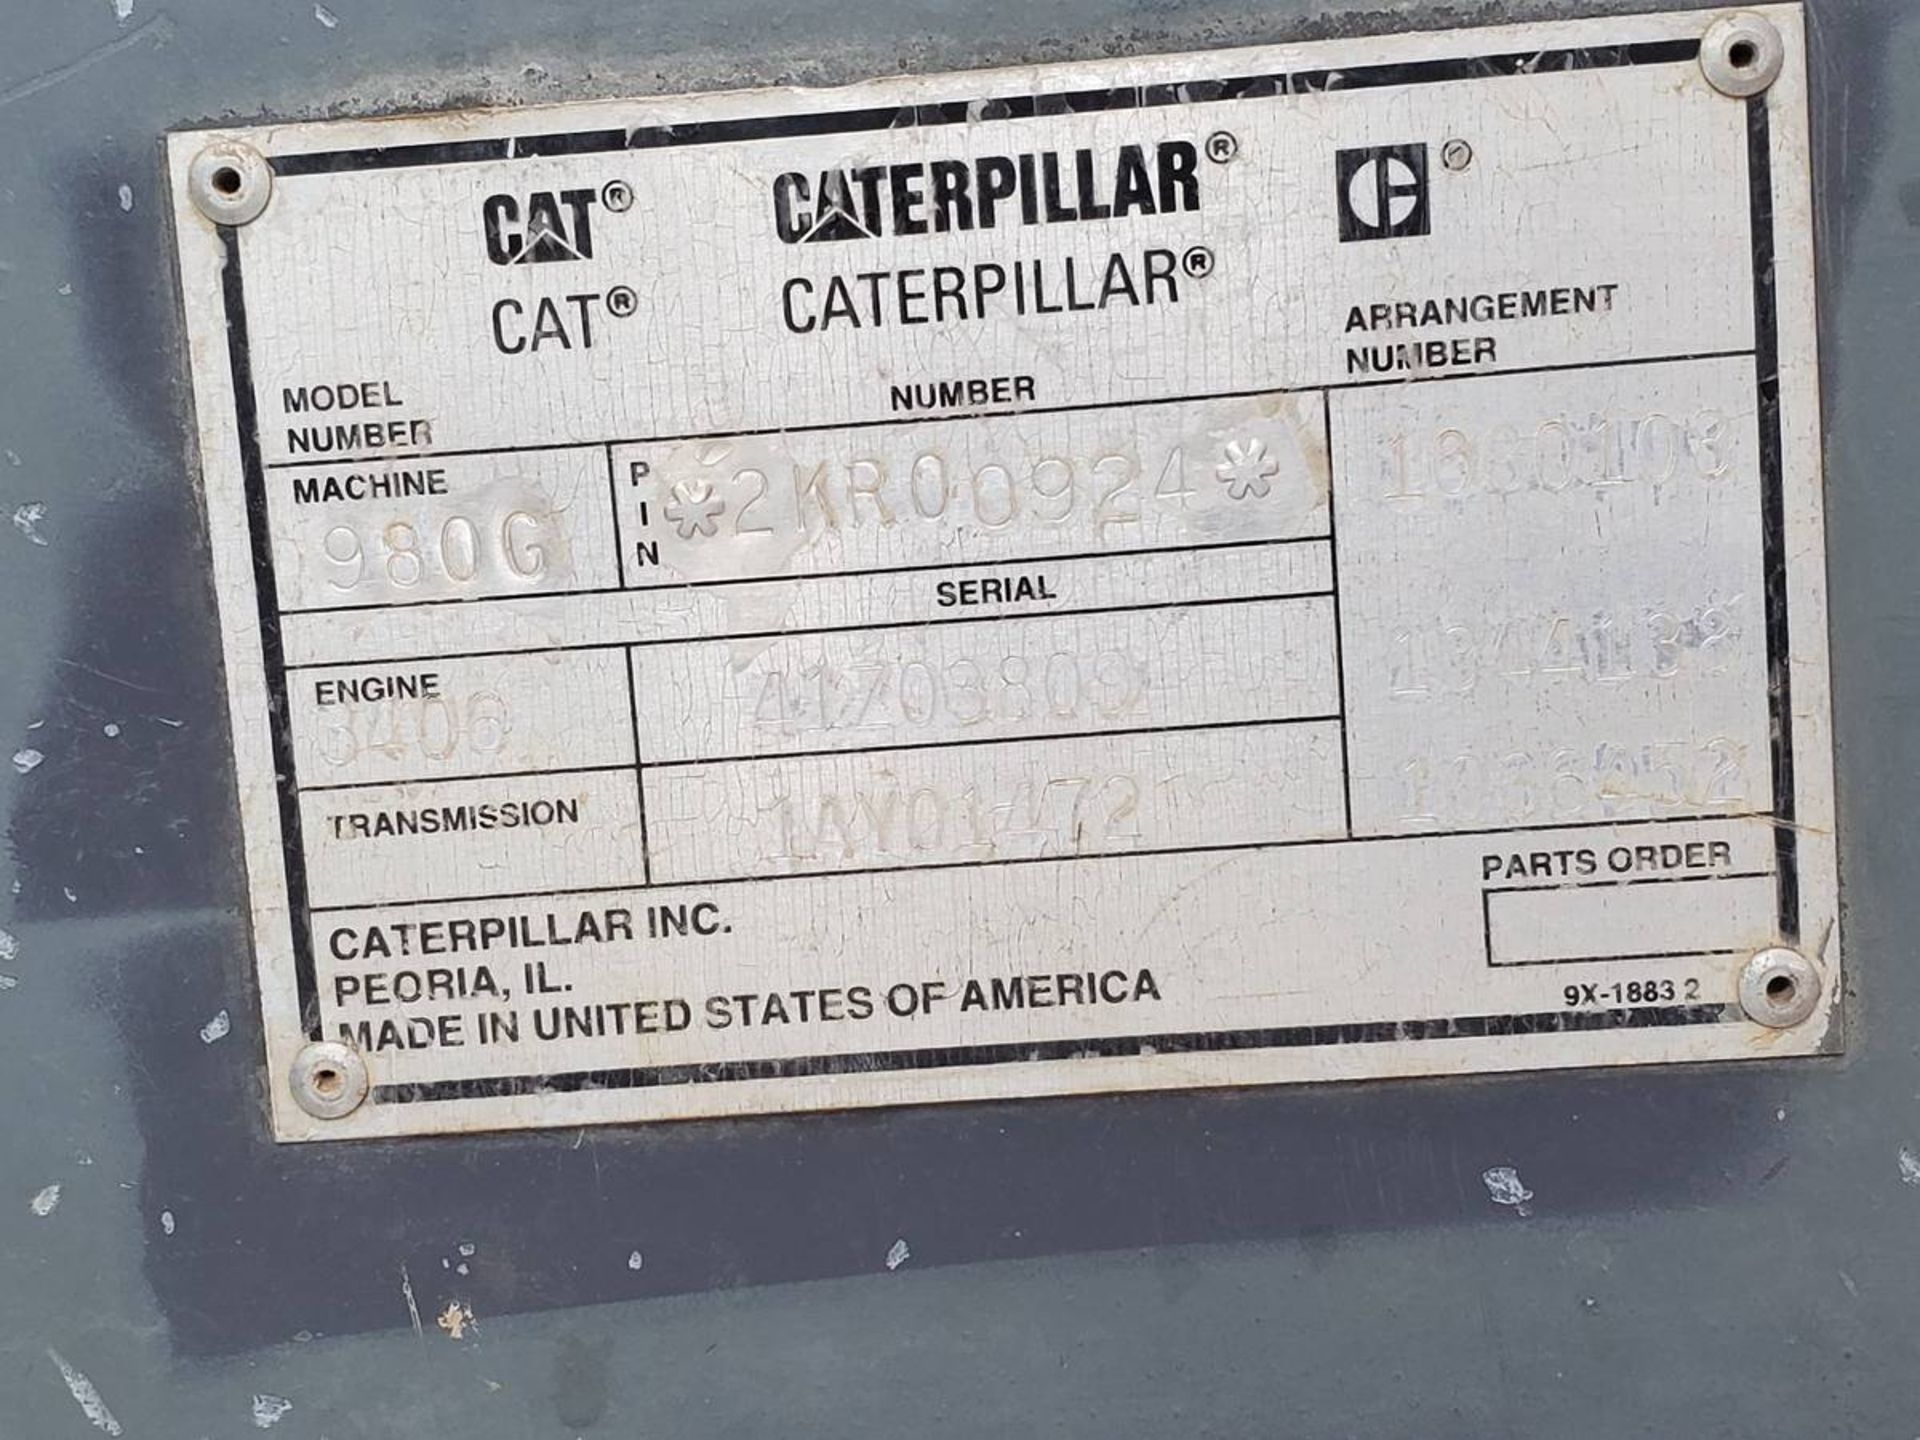 1996 Caterpillar 980G Wheel Loader - Image 9 of 9